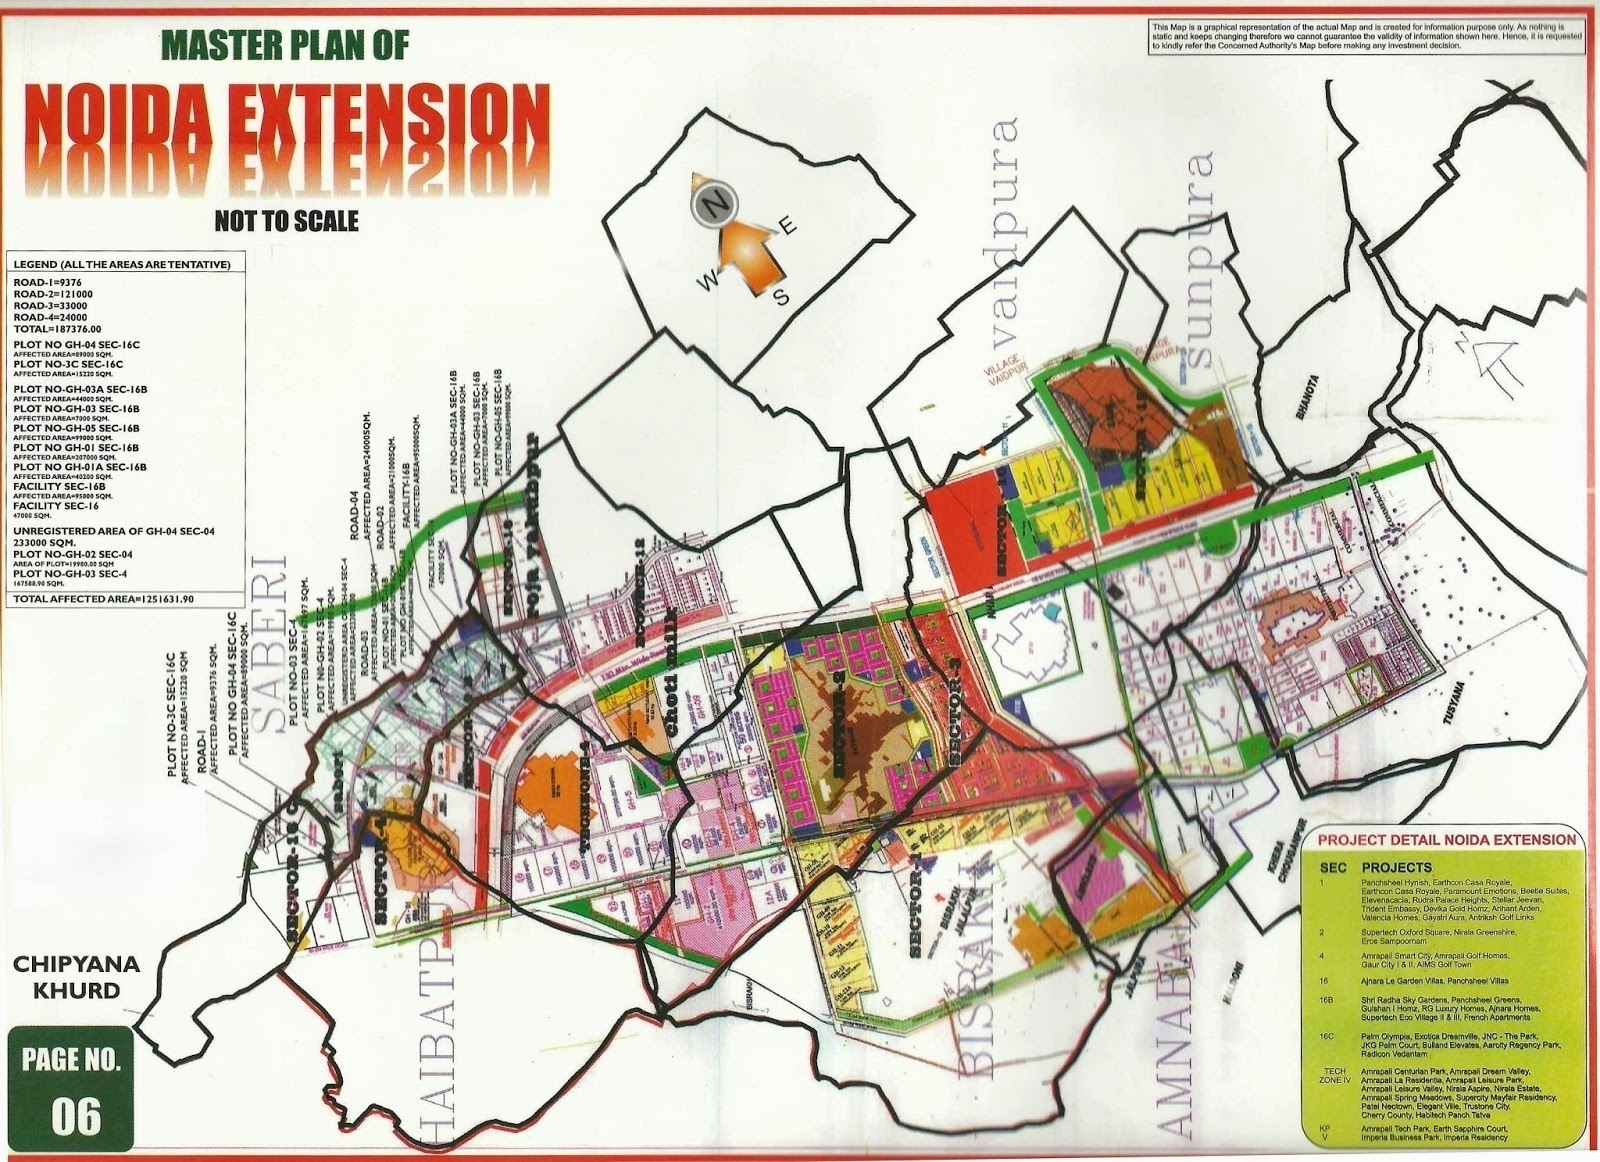 This is the master plan of Noida Extension City in Uttar Pradesh